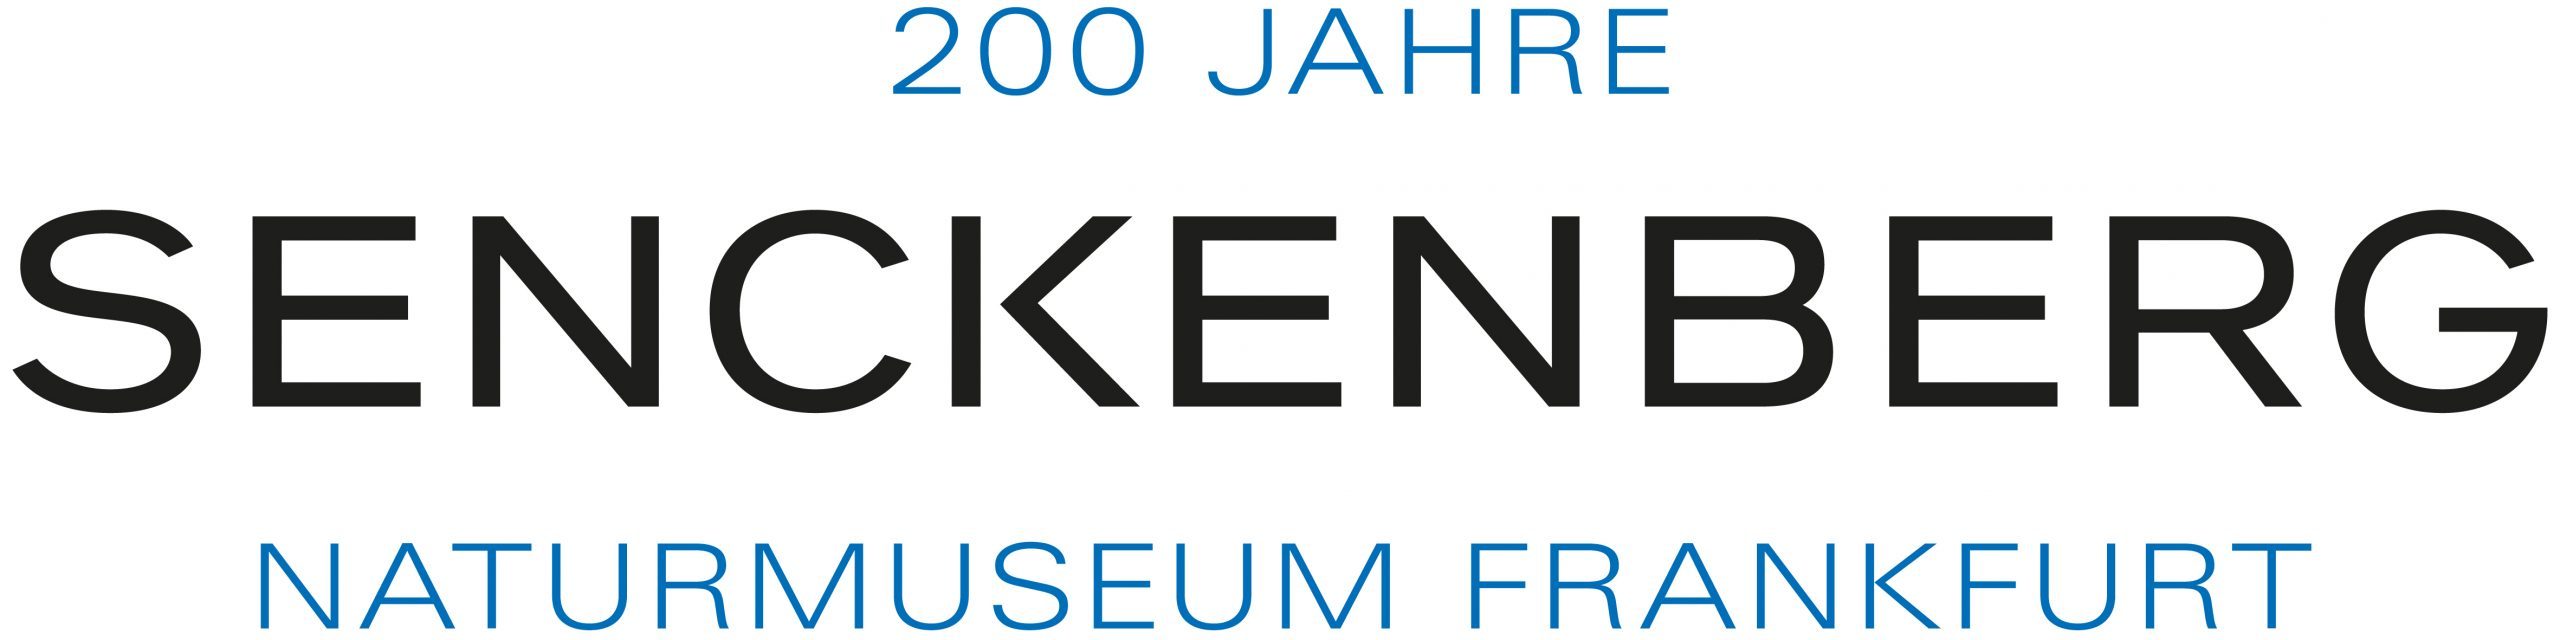 cropped-200_Jahre_Senckenberg_Naturmuseum-Univers-blau-schwarz-scaled-1.jpg